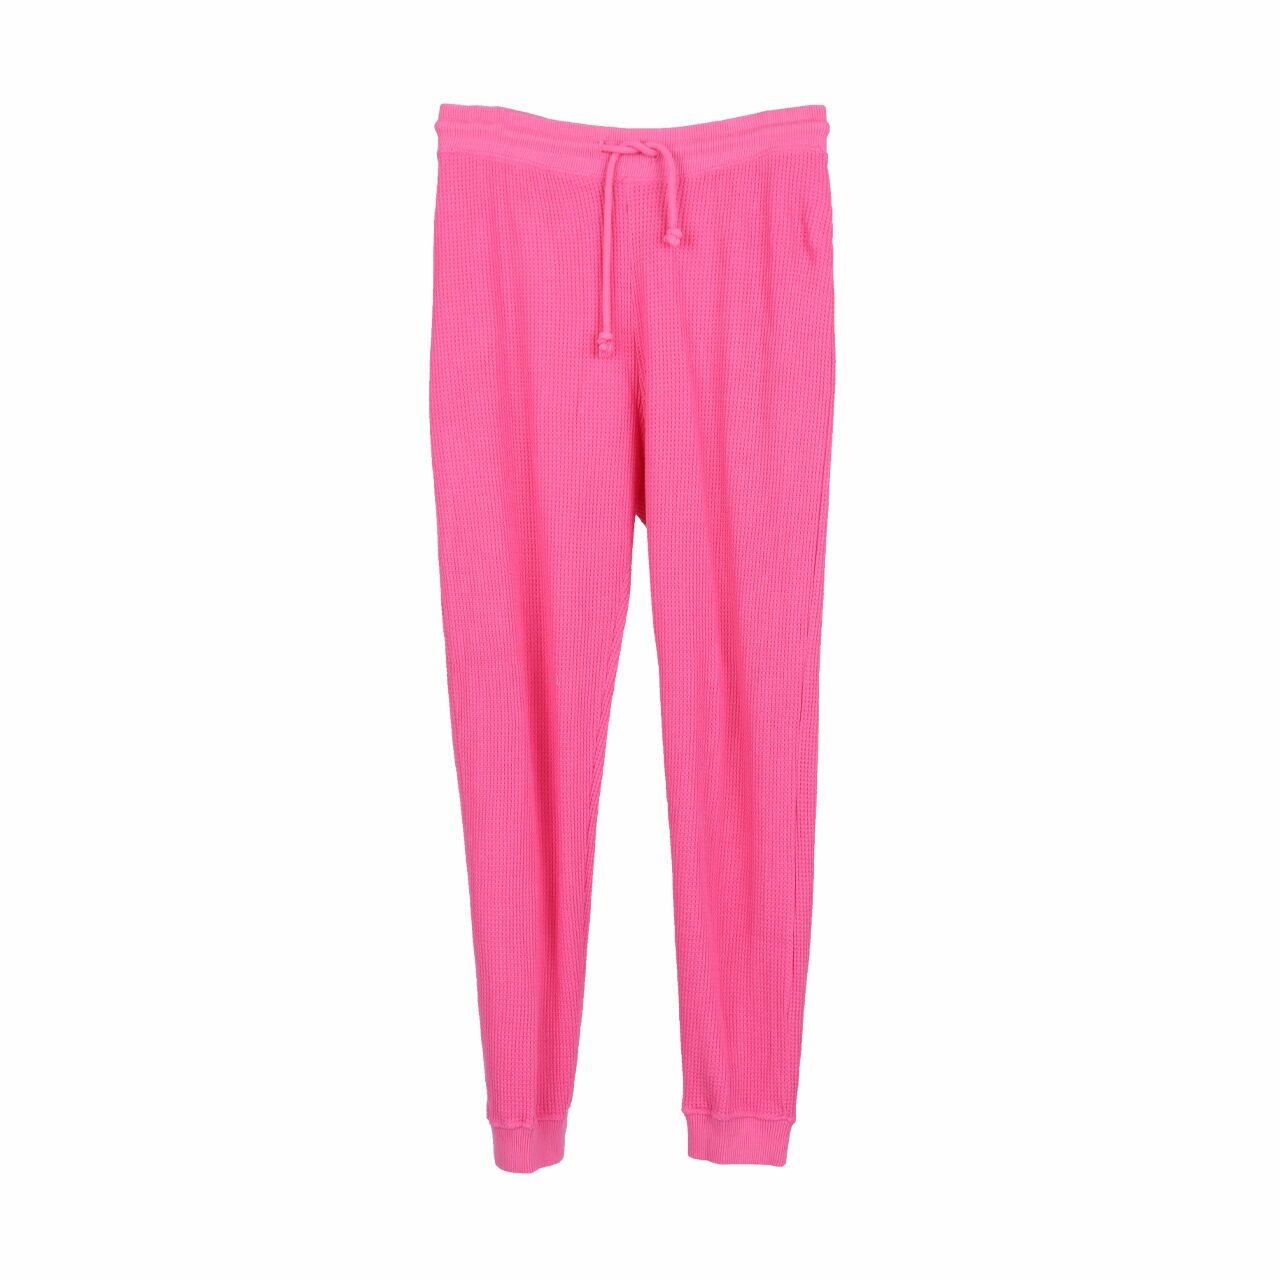 Zara Pink Long Pants